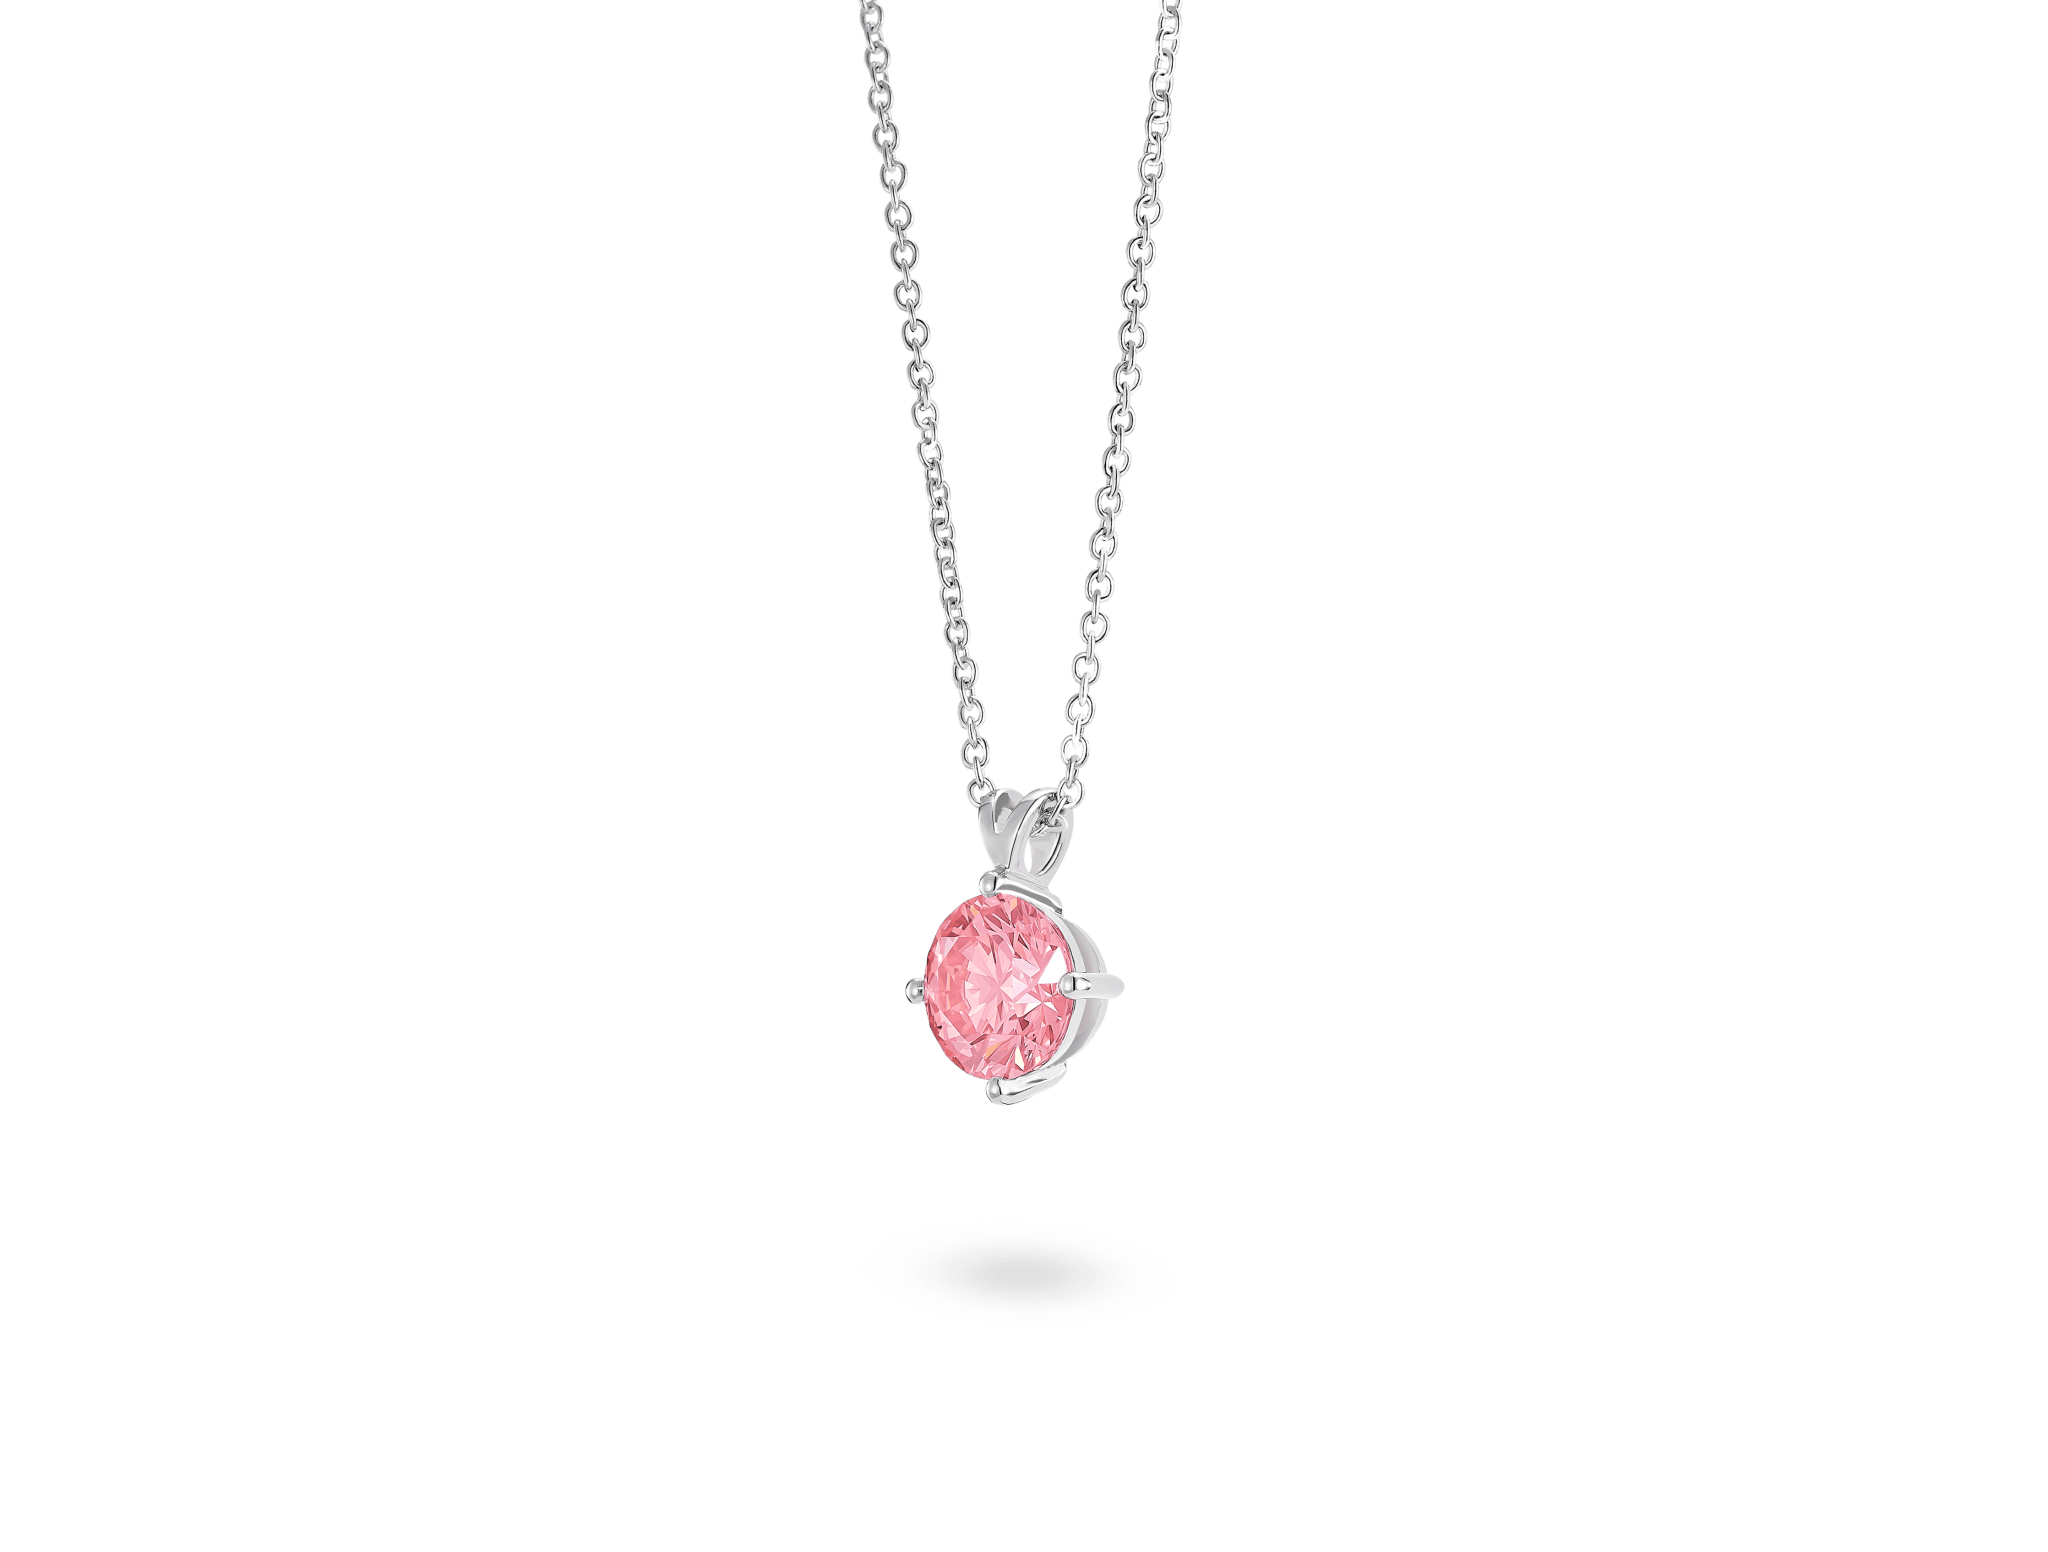 Finest Lab-Grown Diamond 1ct. Round Brilliant Solitaire Pendant | Pink - #Lightbox Jewelry#